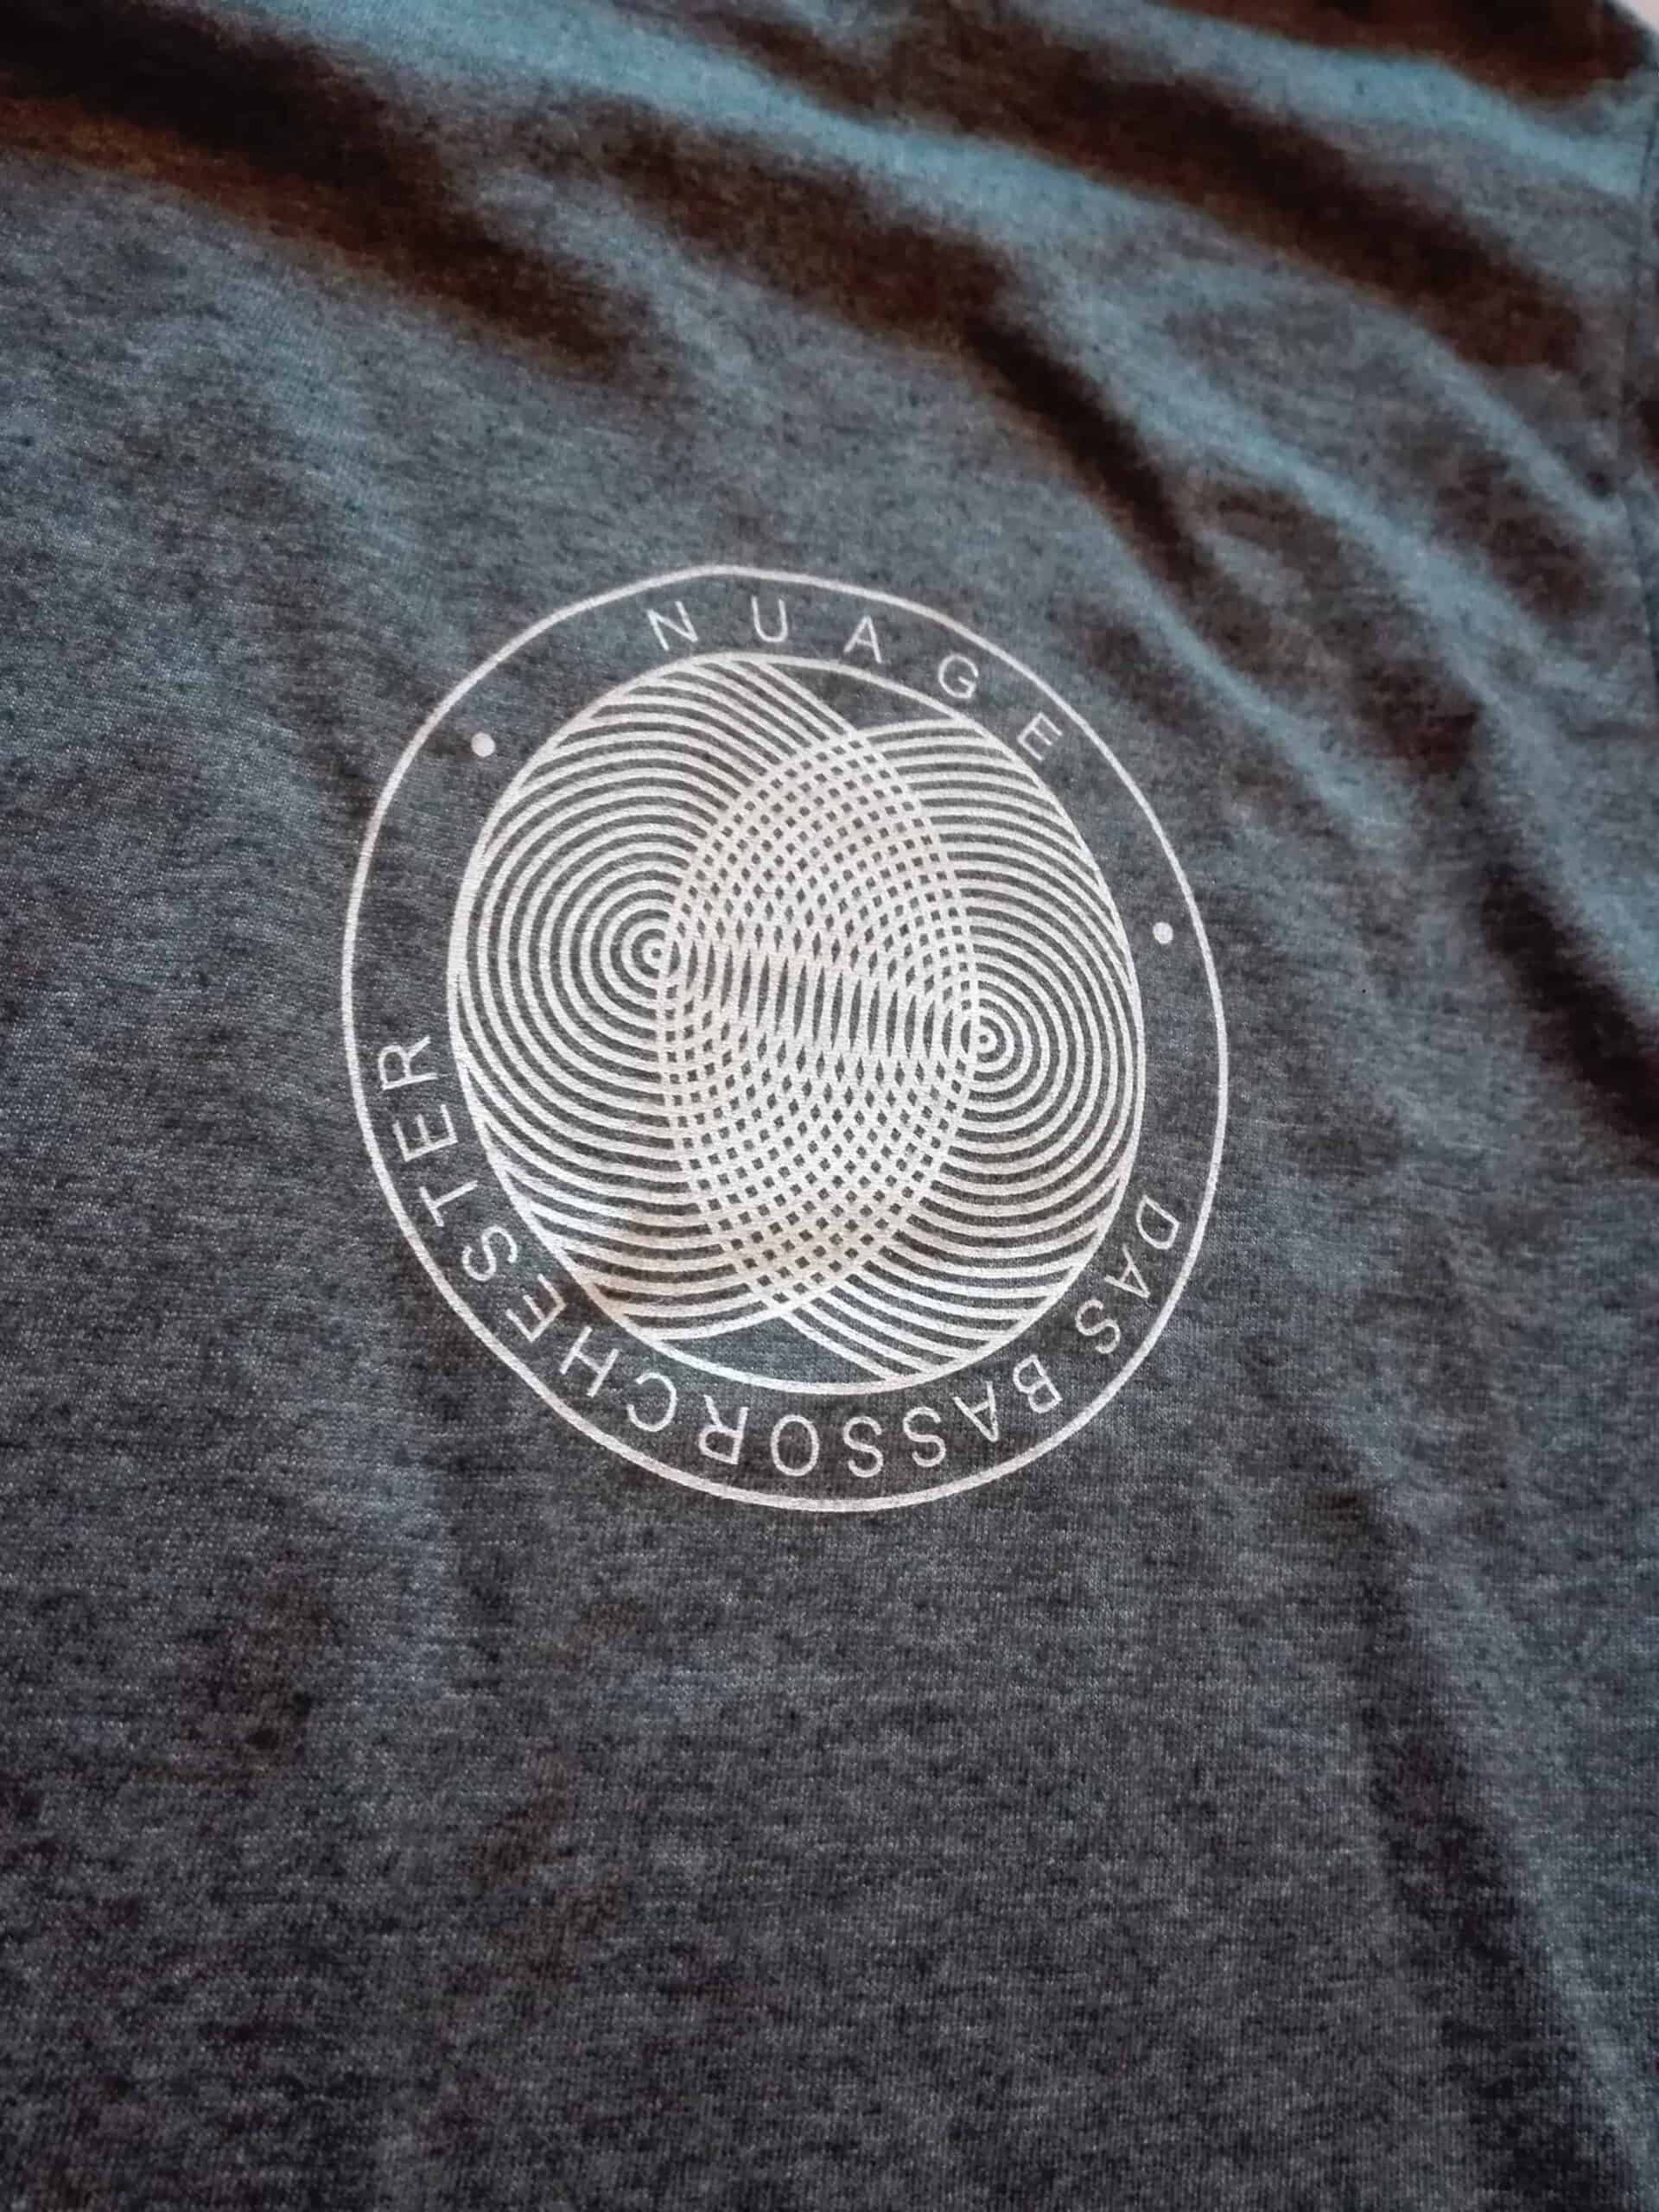 Nuage & das Bassorchester – Logo Shirt Exclusives Nuage & das Bassorchester TCM shirt! 20 copies printed